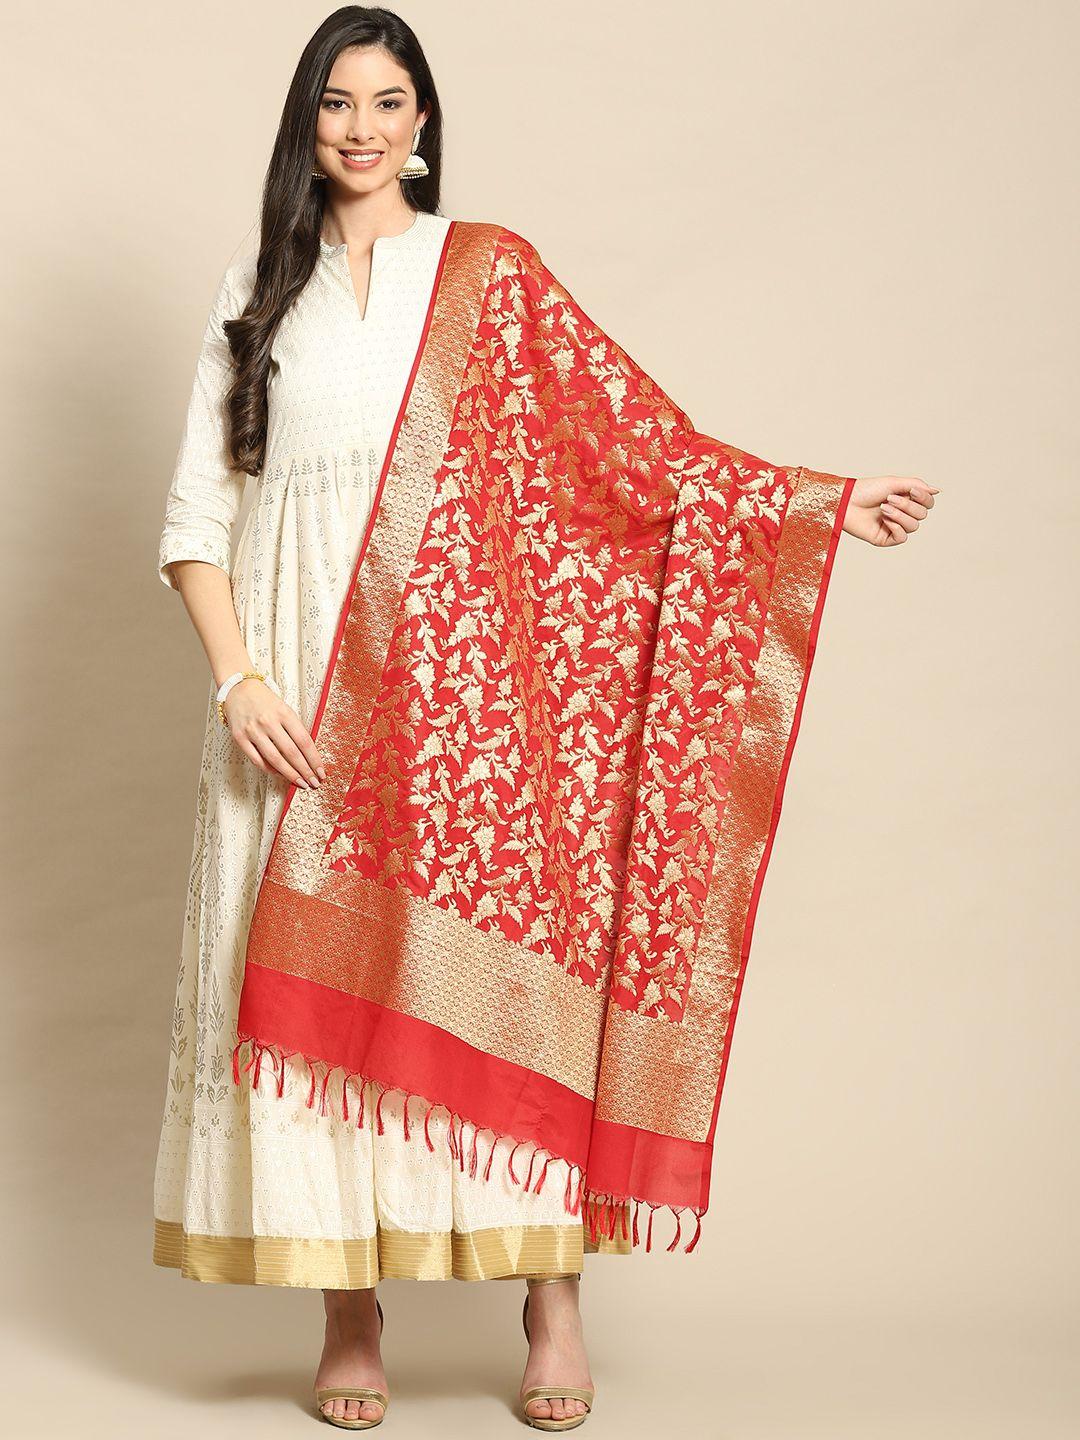 banarasi style red & gold-toned ethnic motifs woven design art silk dupatta with zari